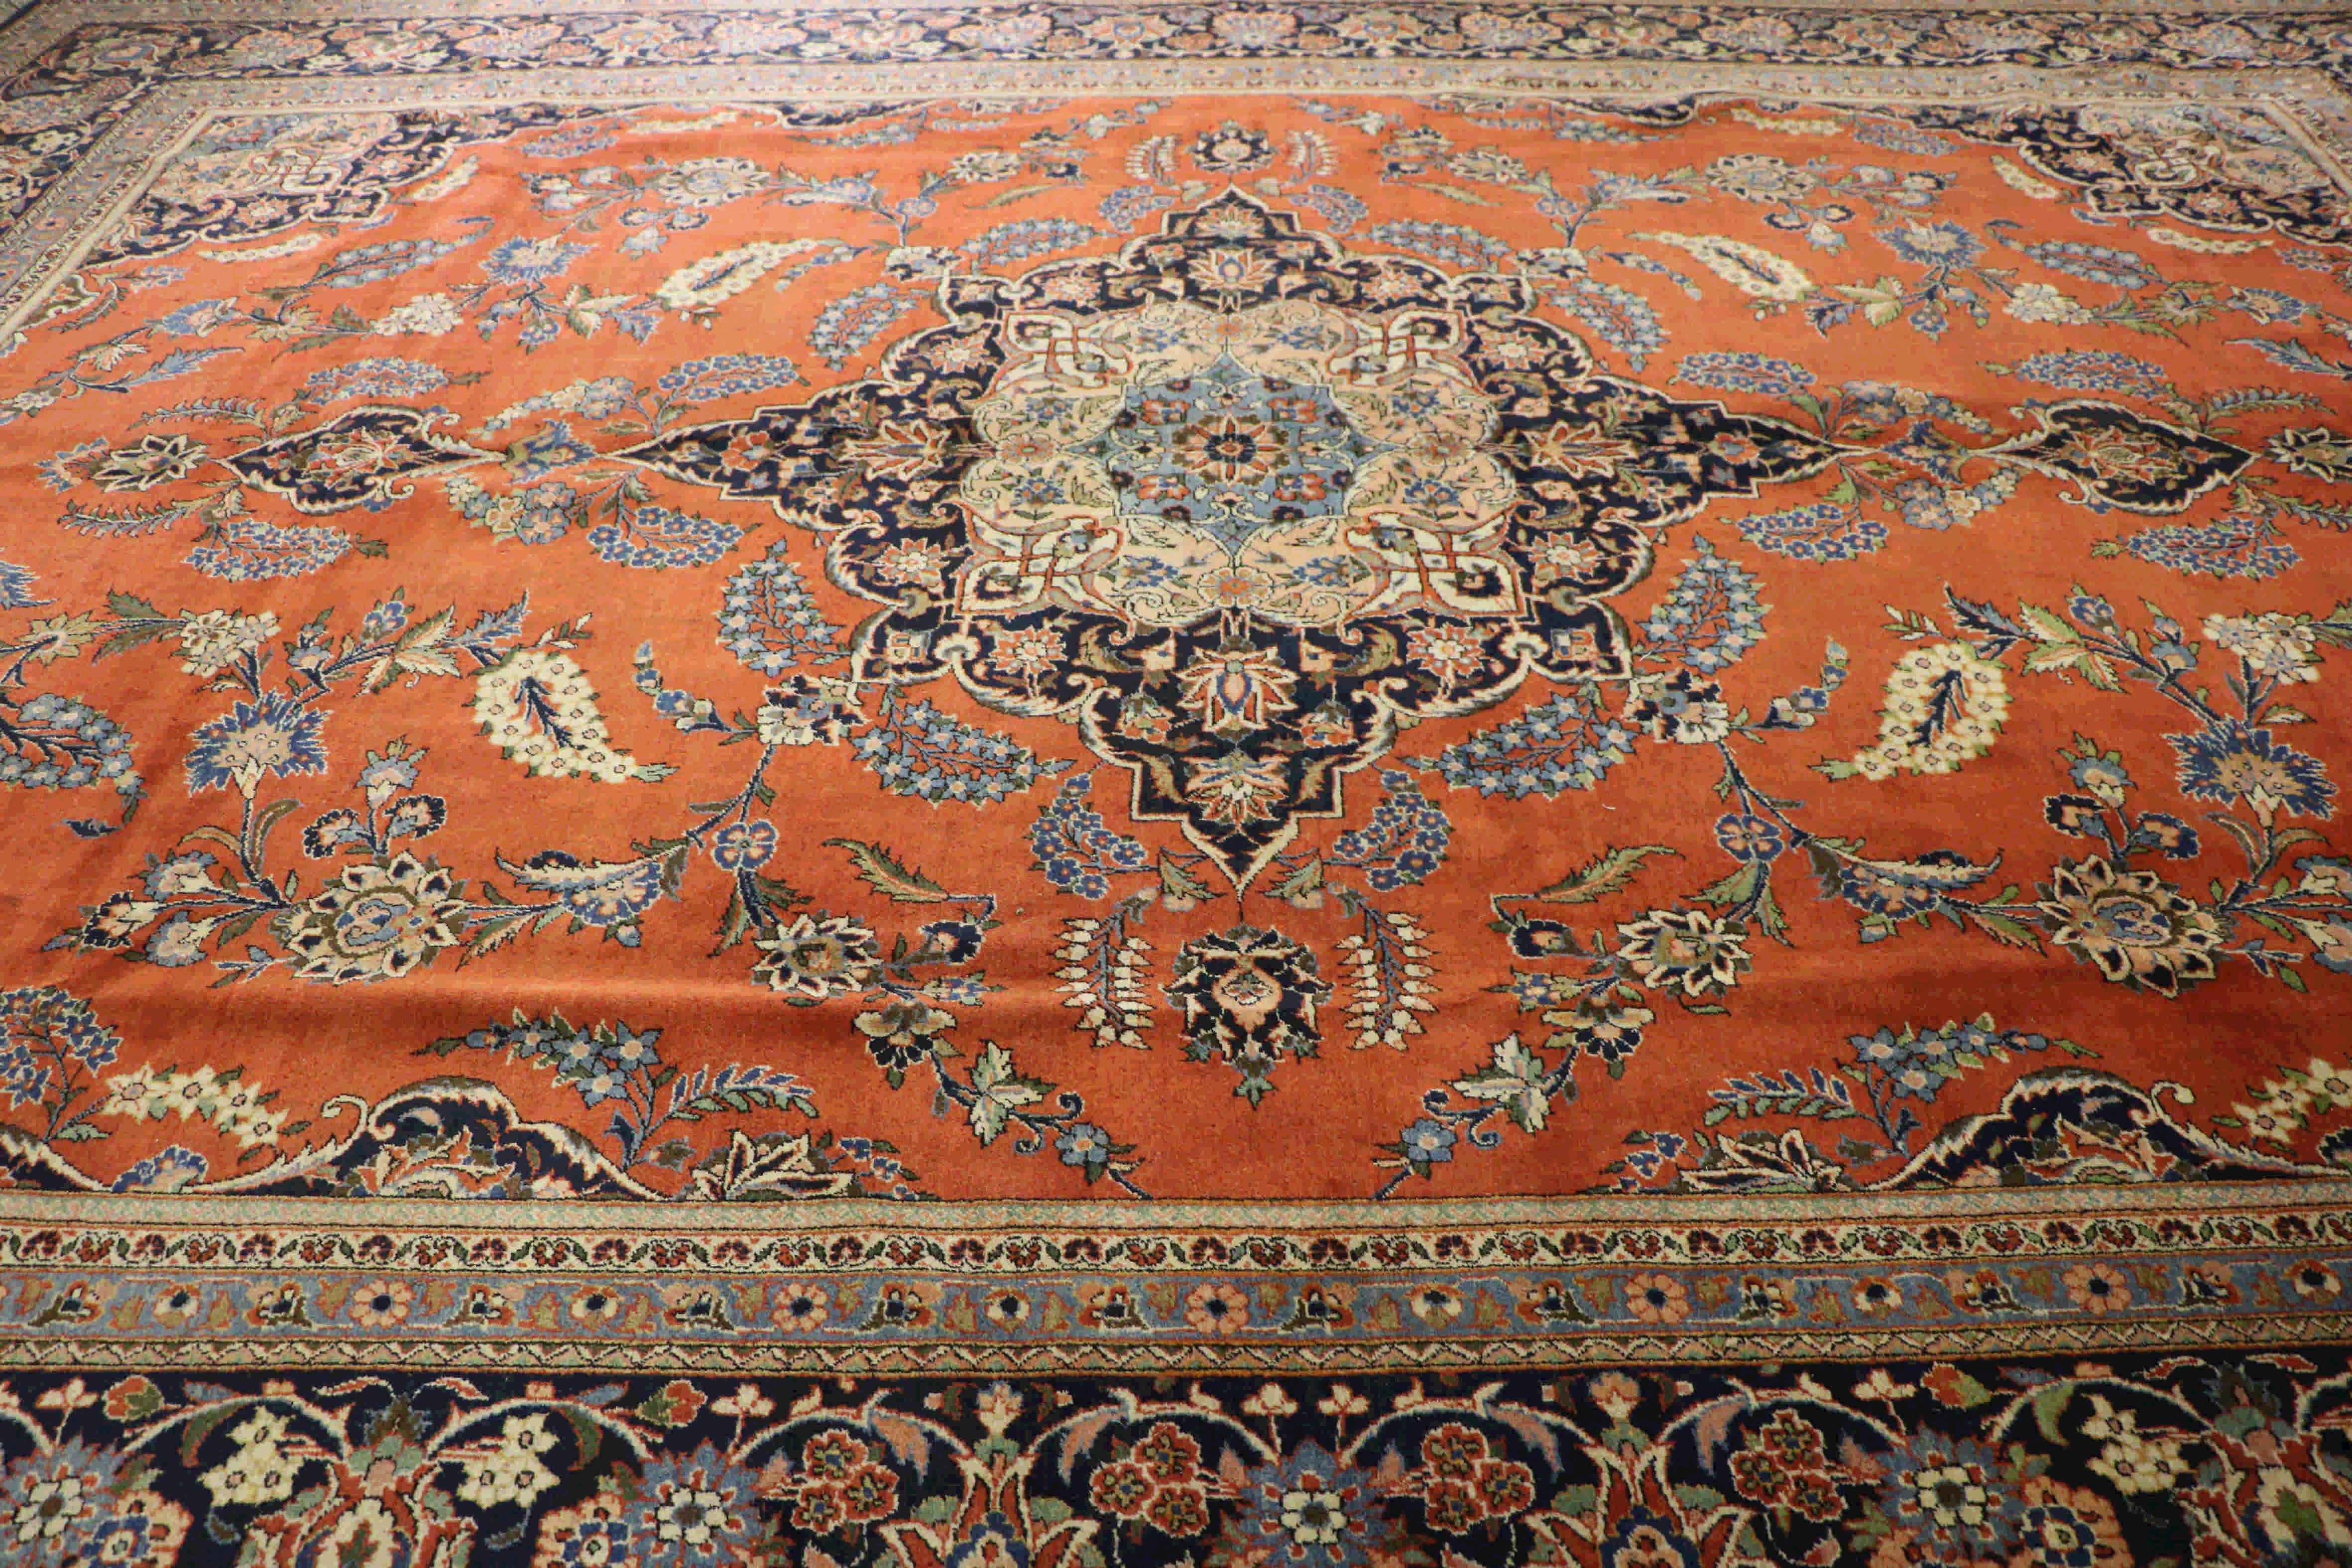 Intricately designed central medallion persian kashan rug